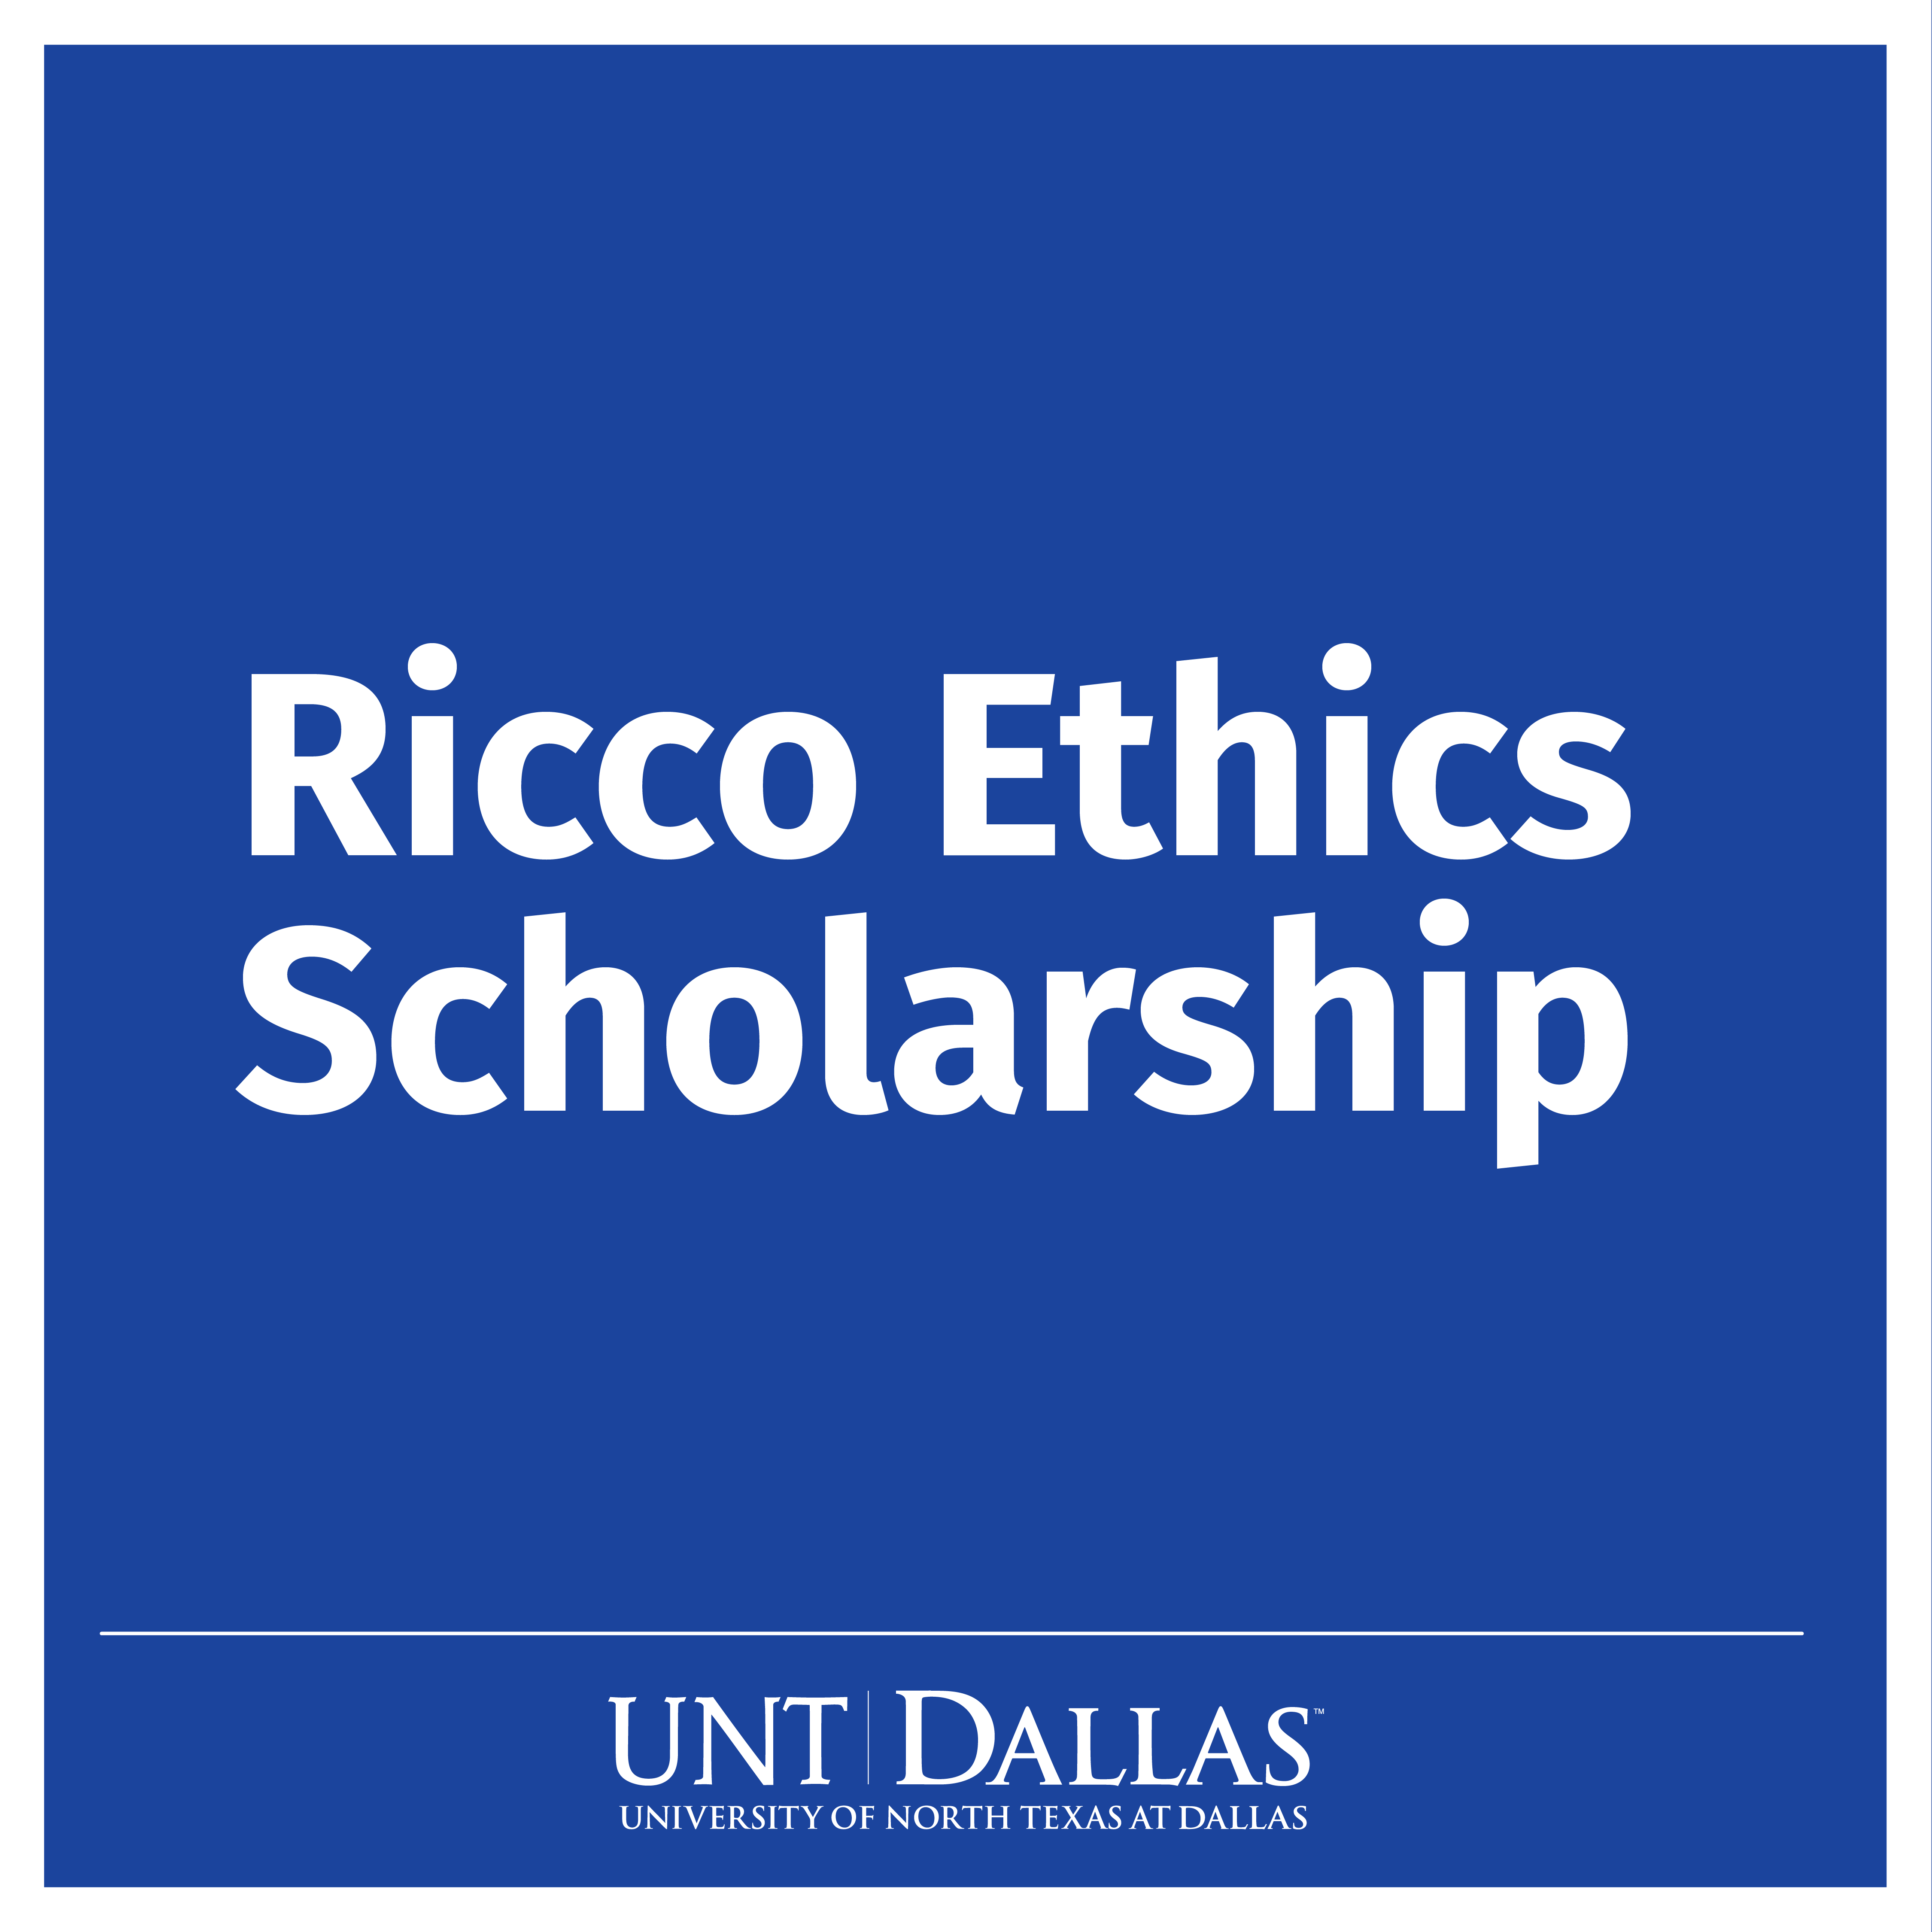 Ricco Ethics Scholarship